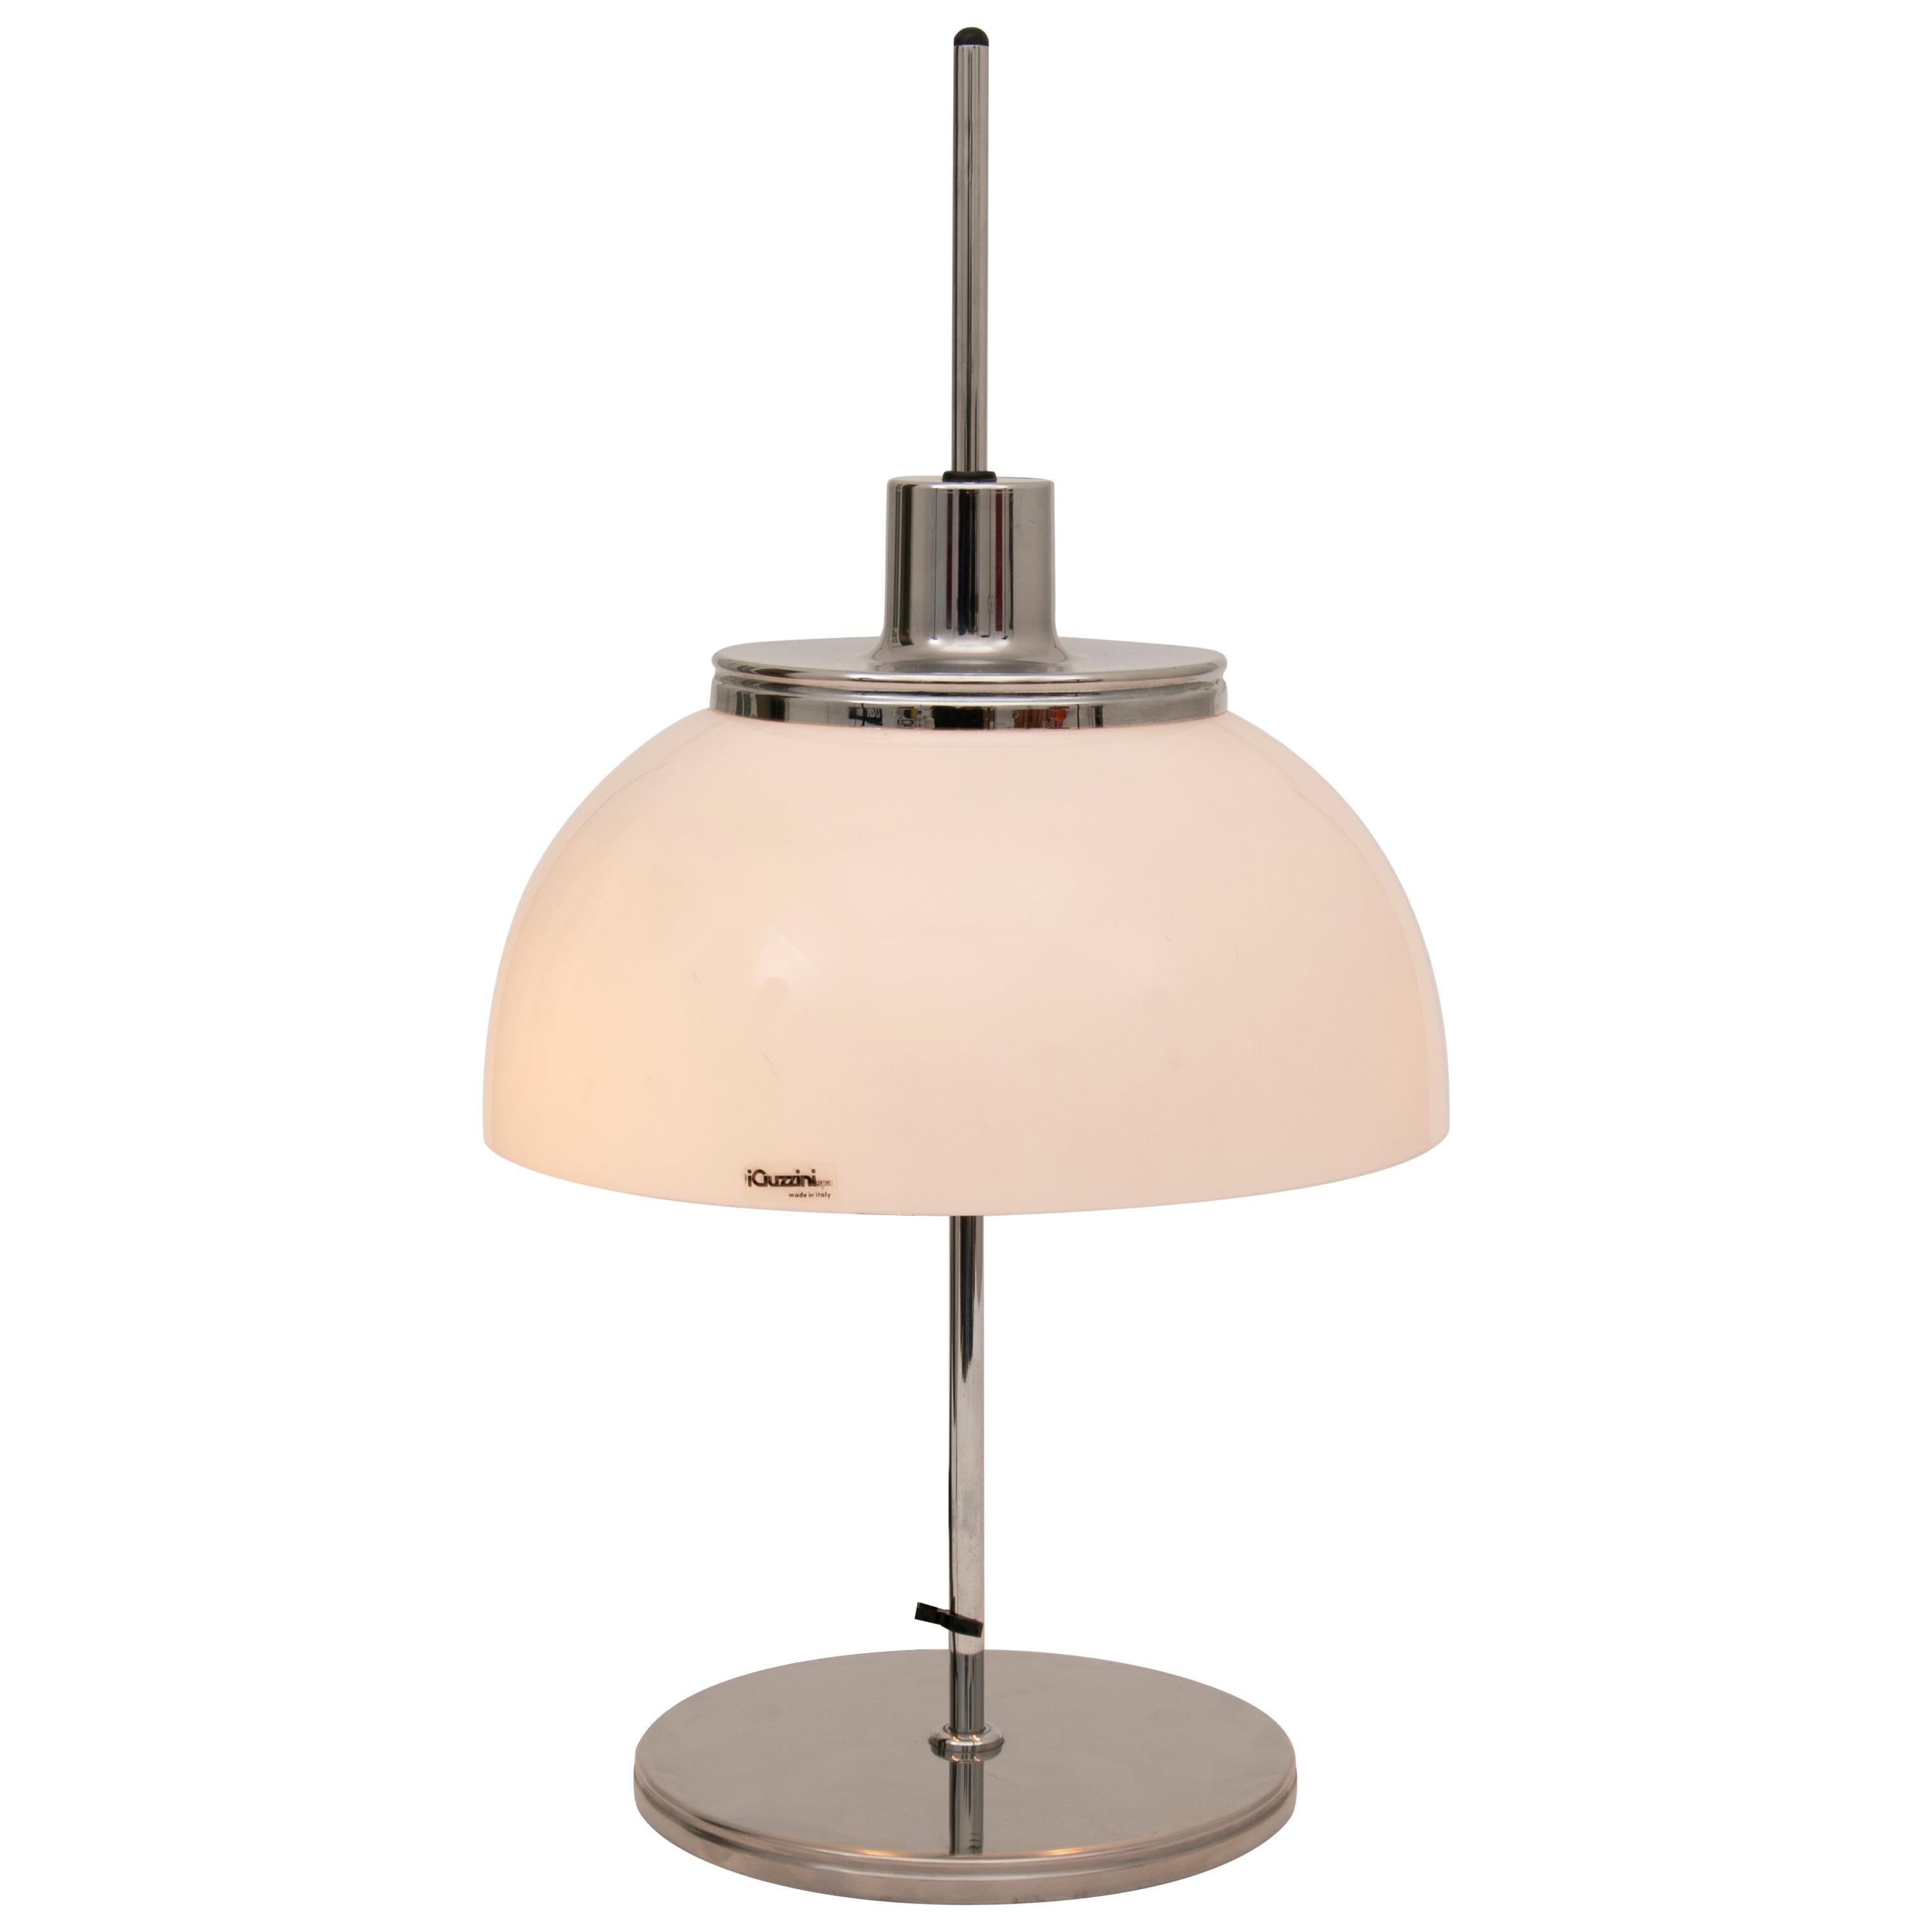 1970s Italian iGuzzini Panton Mushroom Chrome and Acrylic Space Age Table Lamp